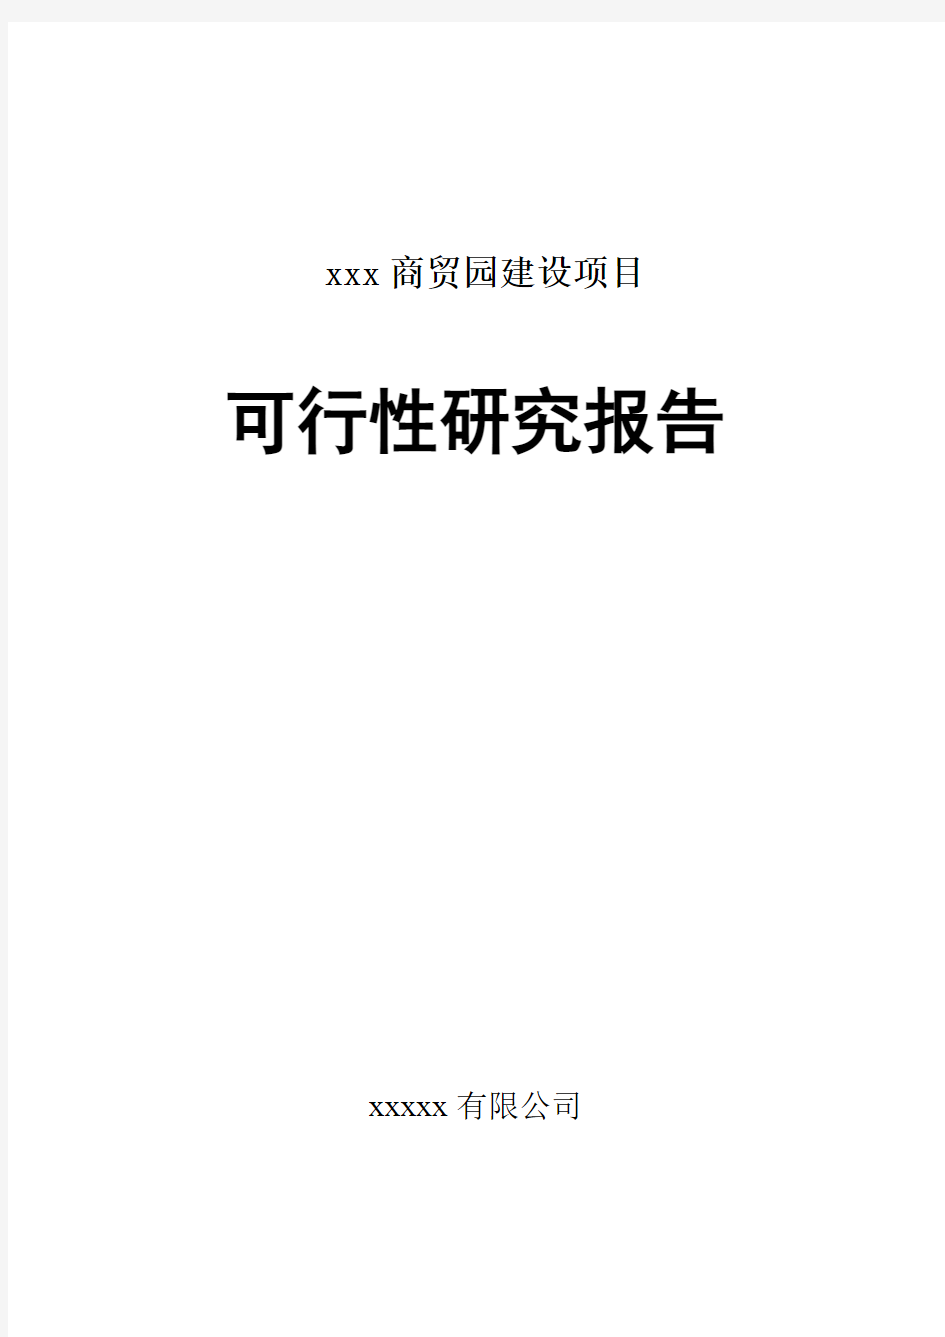 XXX商贸园建设项目可行性研究报告(最新可研)